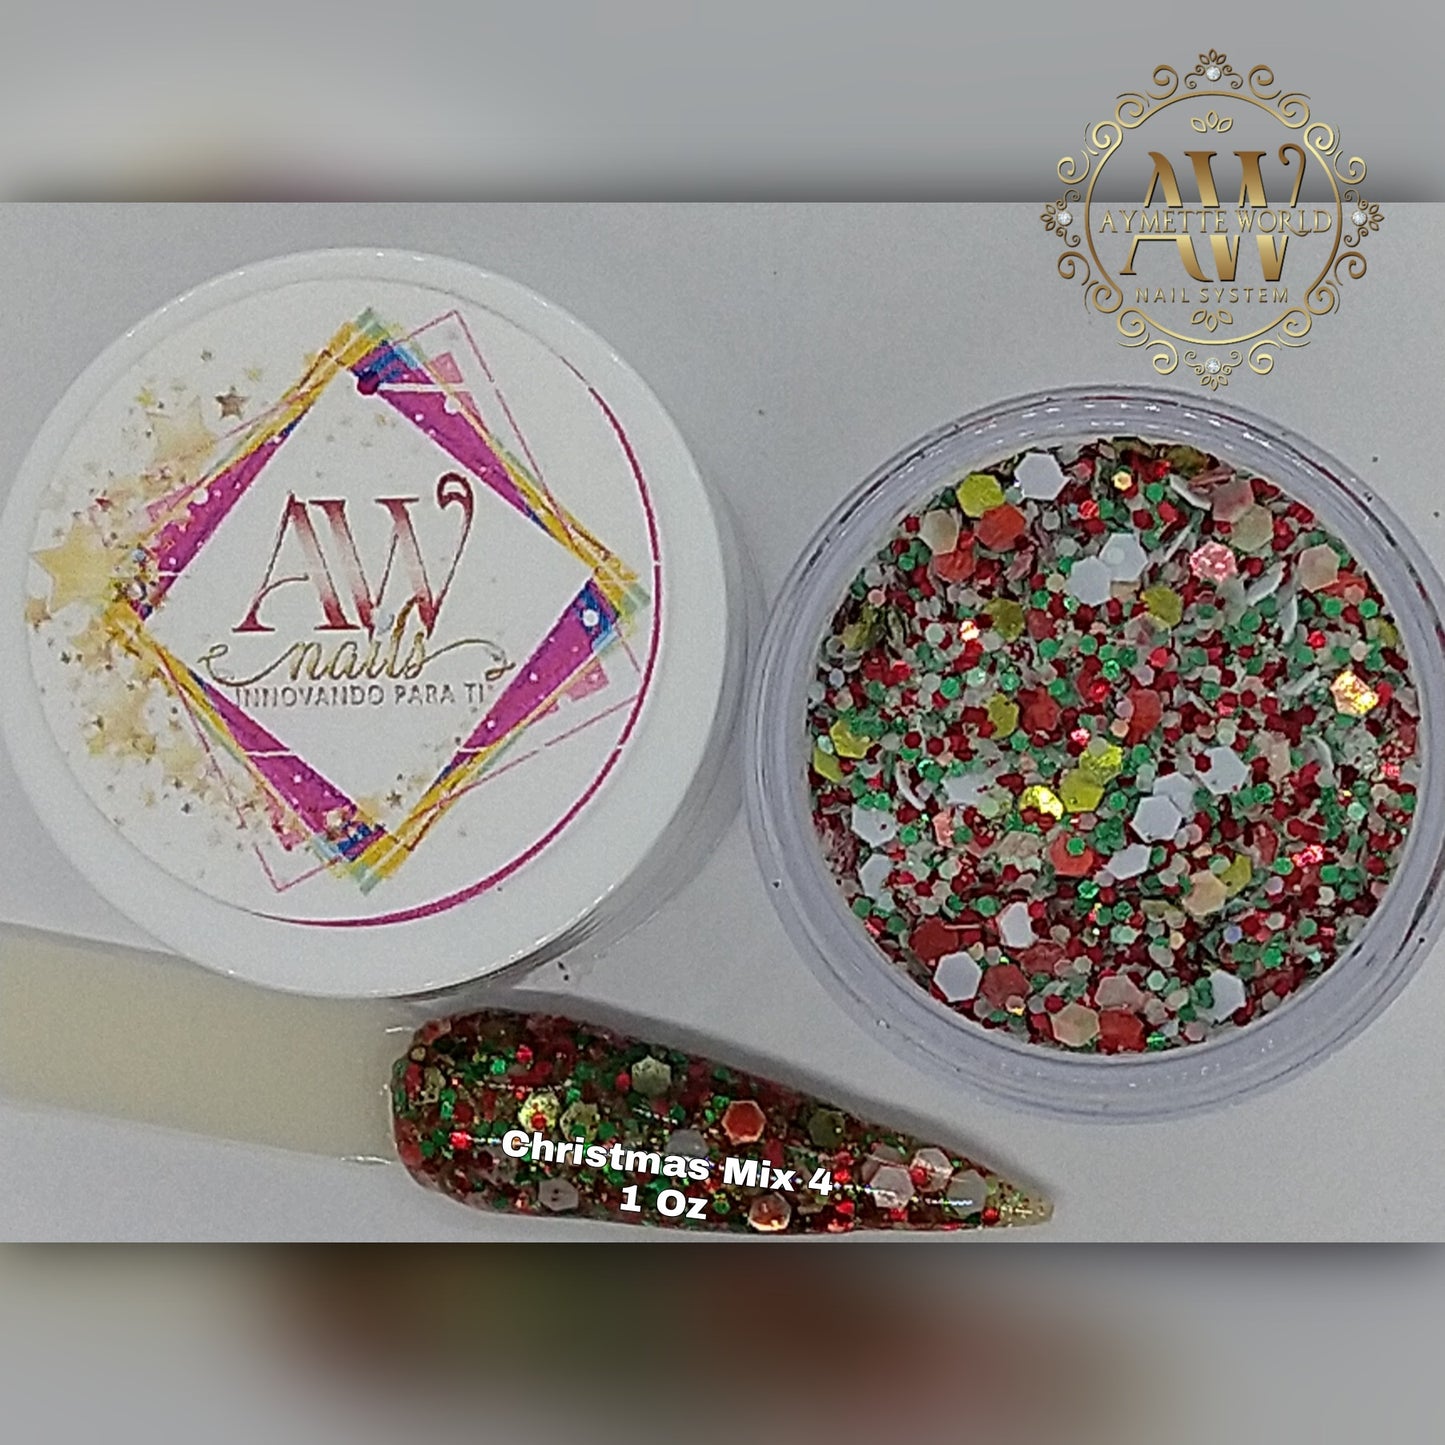 Glitter mix Christmas 🎄 4 1oz